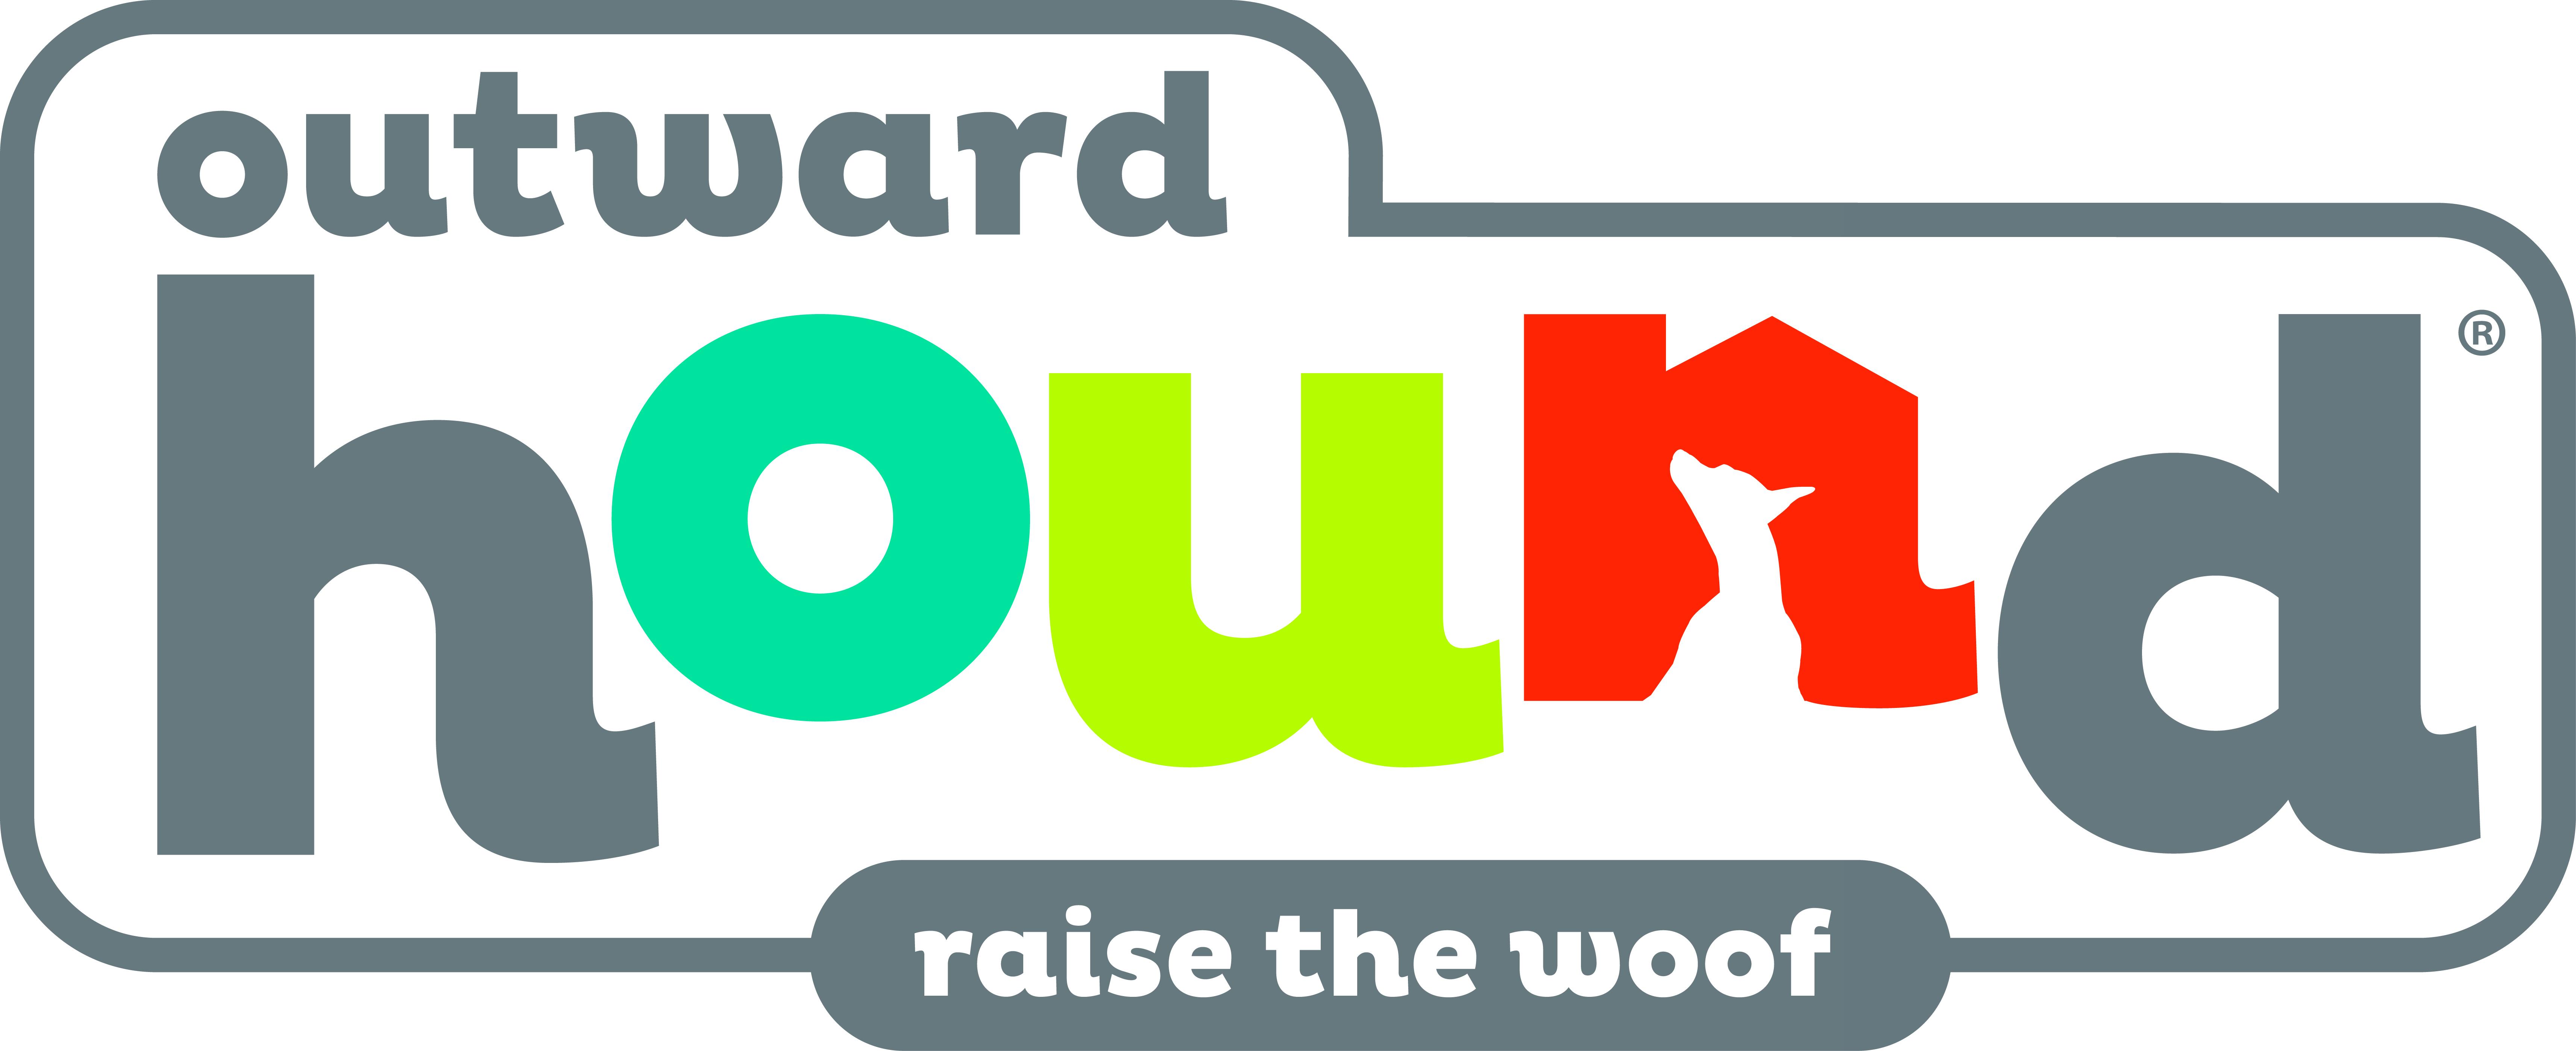 Outwards Hound Logo